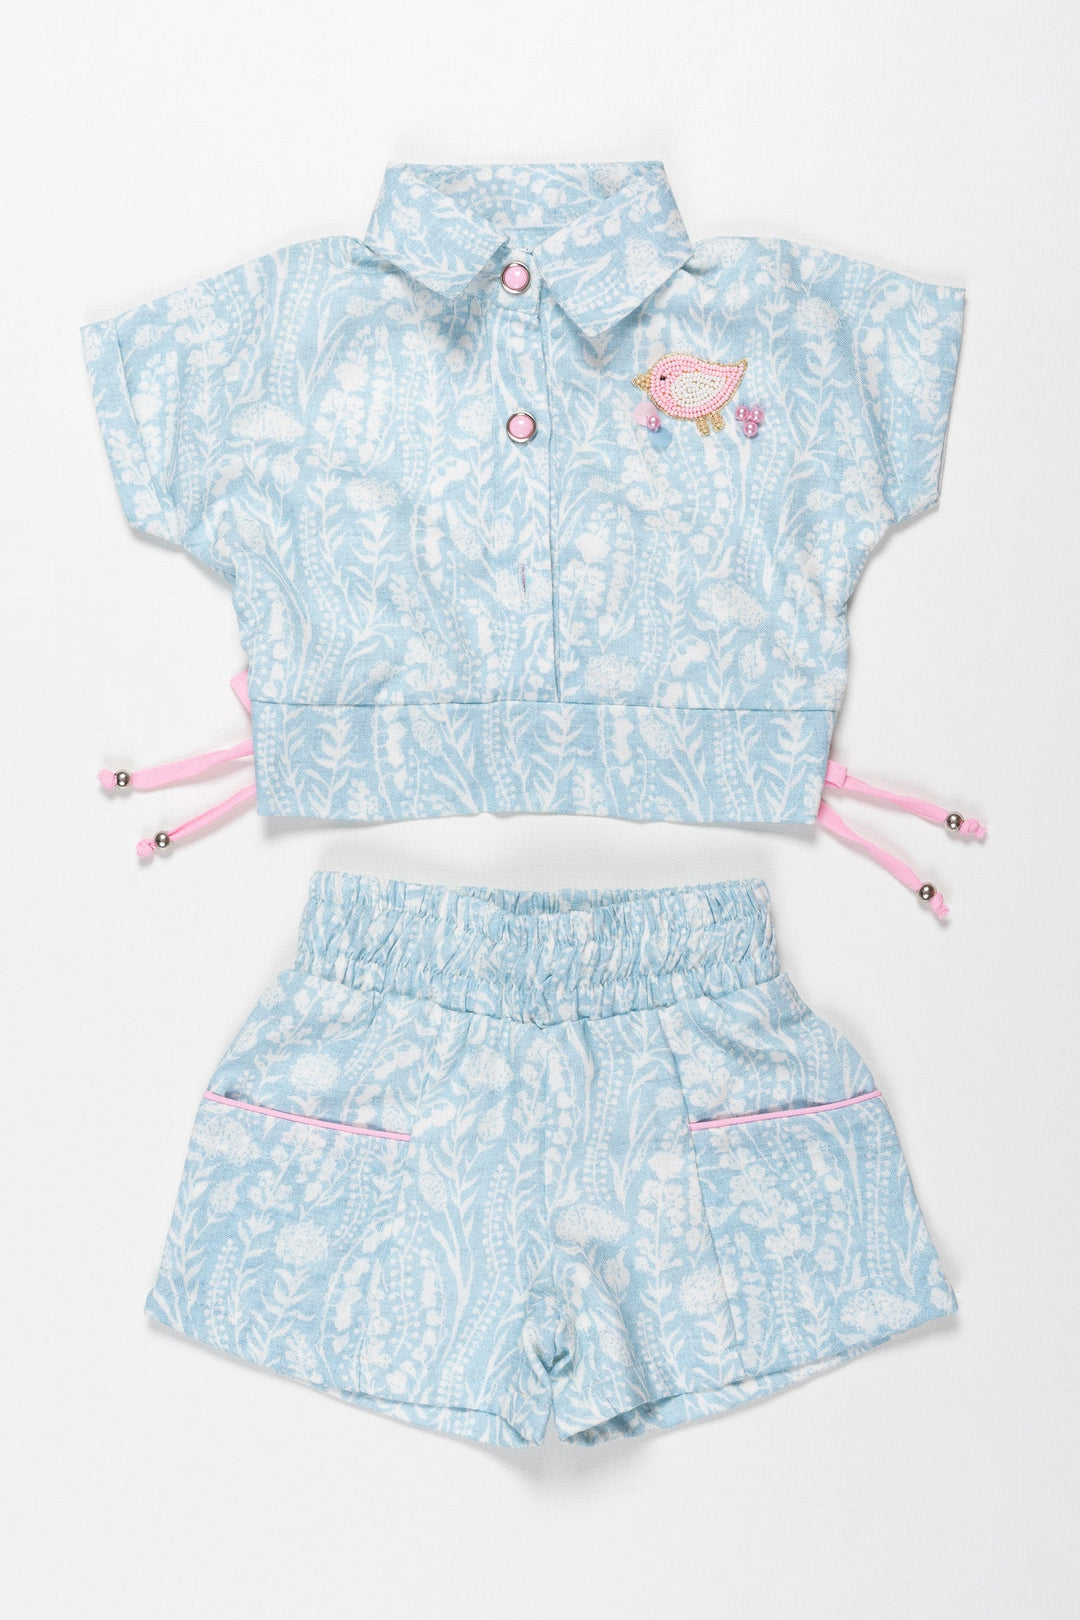 The Nesavu Baby Casual Sets Chic Blue Leaf Print Baby Girls Shirt and Shorts Set Nesavu 16 (1Y) / Blue / Cotton BFJ518A-16 Blue Leaf Baby Girl Outfit Set | Short Sleeve Shirt  Shorts | The Nesavu